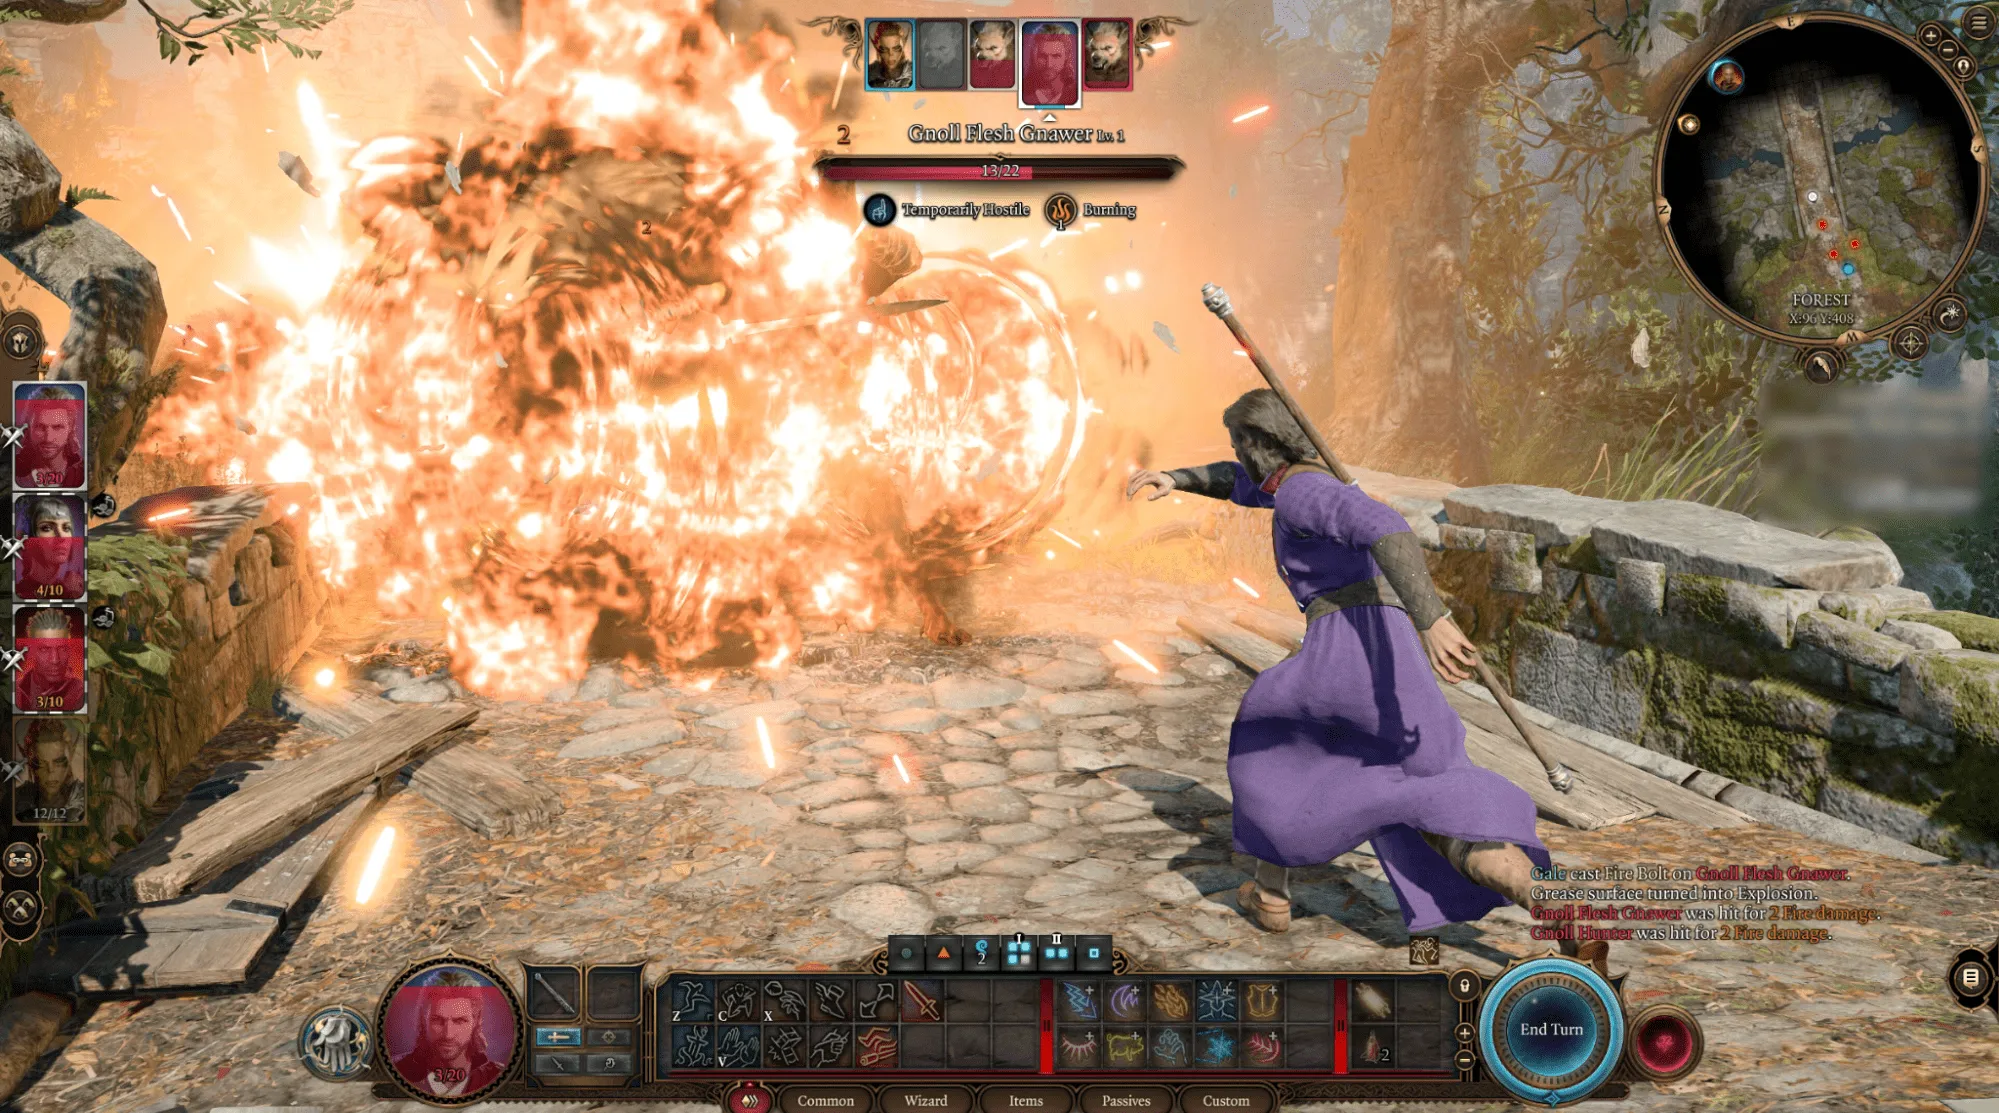 Baldur's gate 3 game screenshot